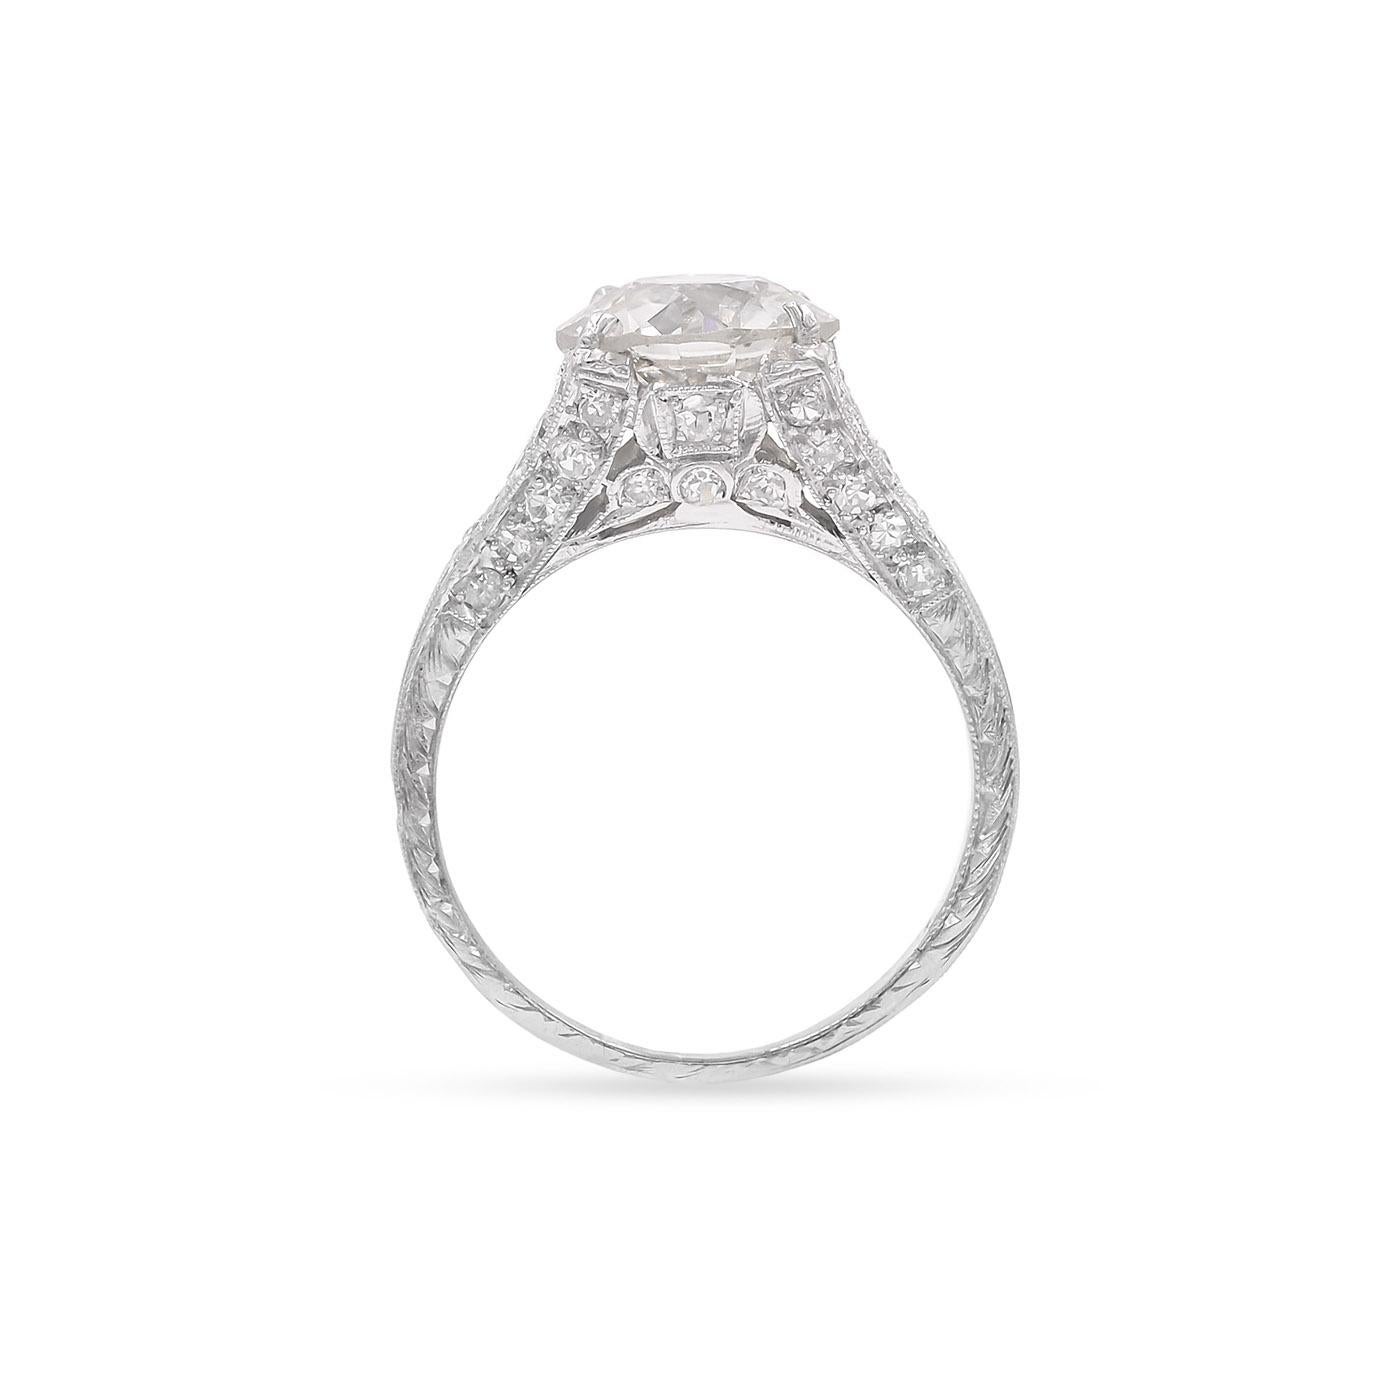 2.99 carat diamond ring